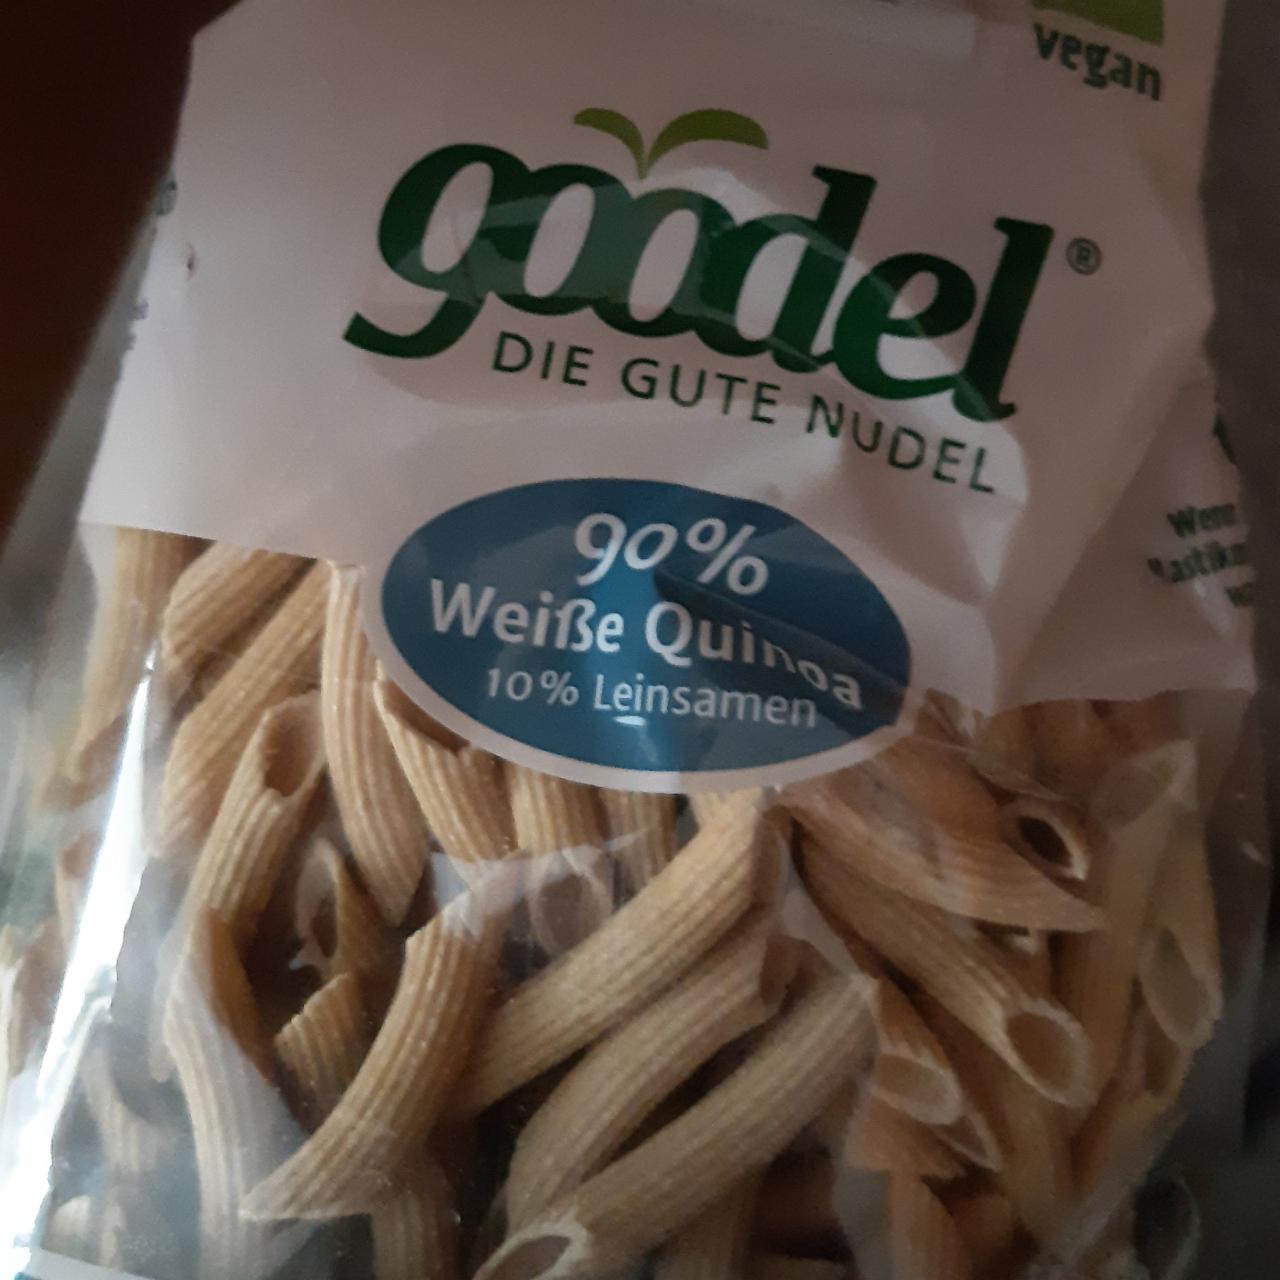 Fotografie - Goodel die gute nudel 90% Weiße Quinoa 10% Leinsamen Govinda